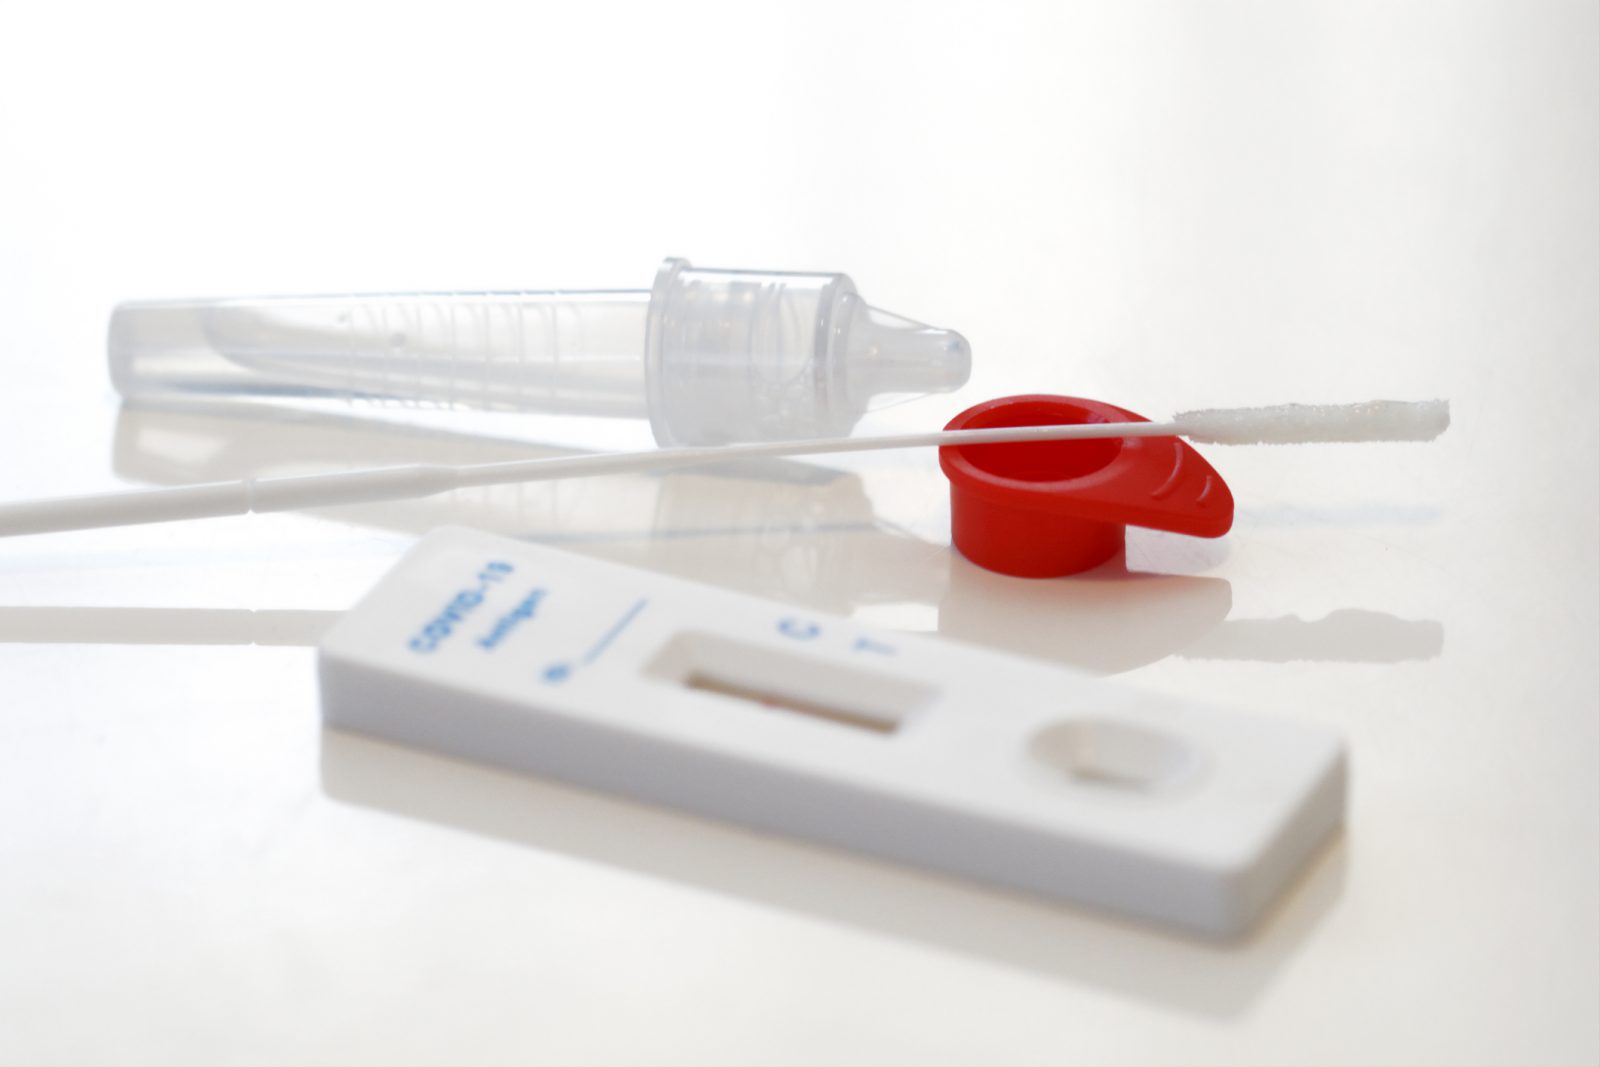 Types of Rapid antigen tests